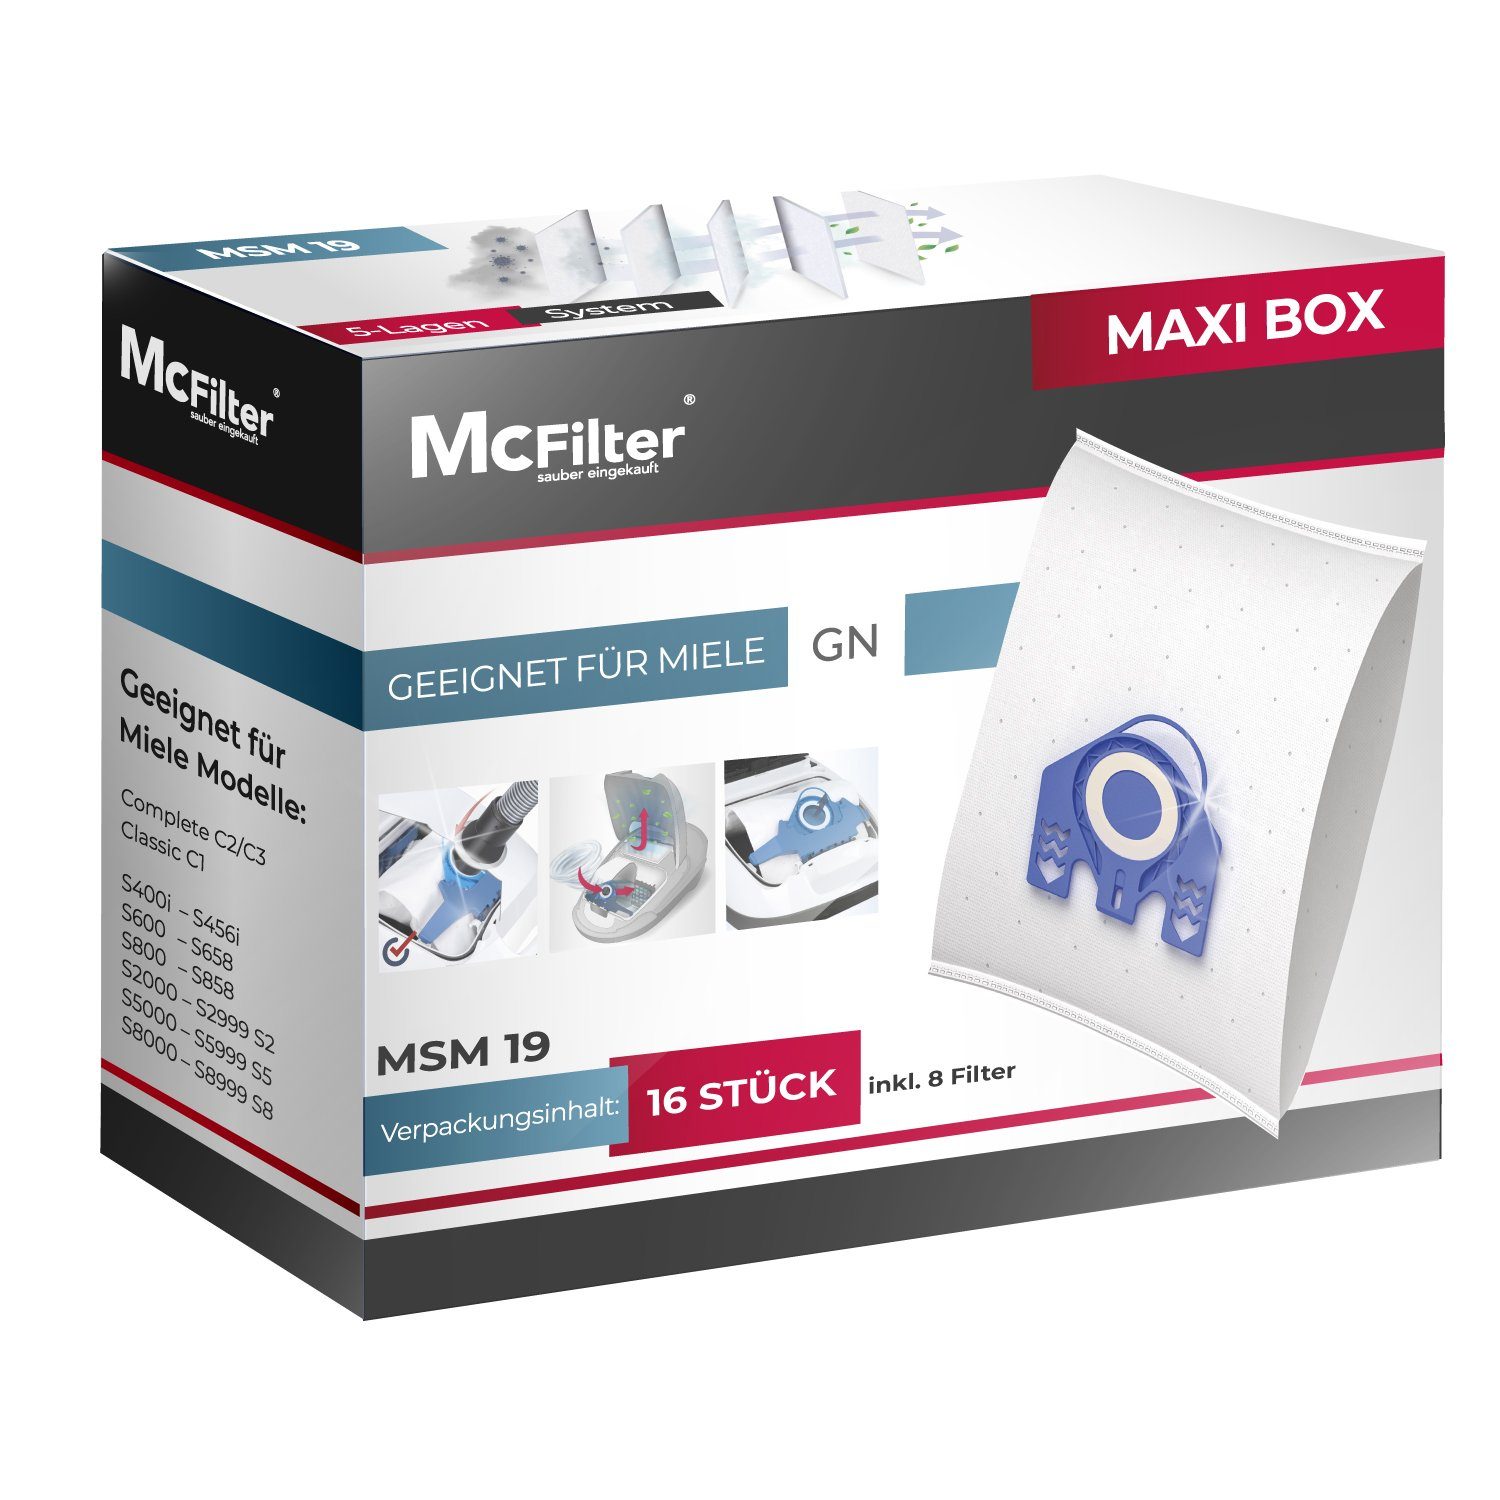 McFilter Staubsaugerbeutel >MAXI BOX< (16+8), passend für Miele S 800 … 899 Serie Staubsauger, inkl. 8 Filter, 16 St., Top Alternative zu 9917730, wie Miele 10408410